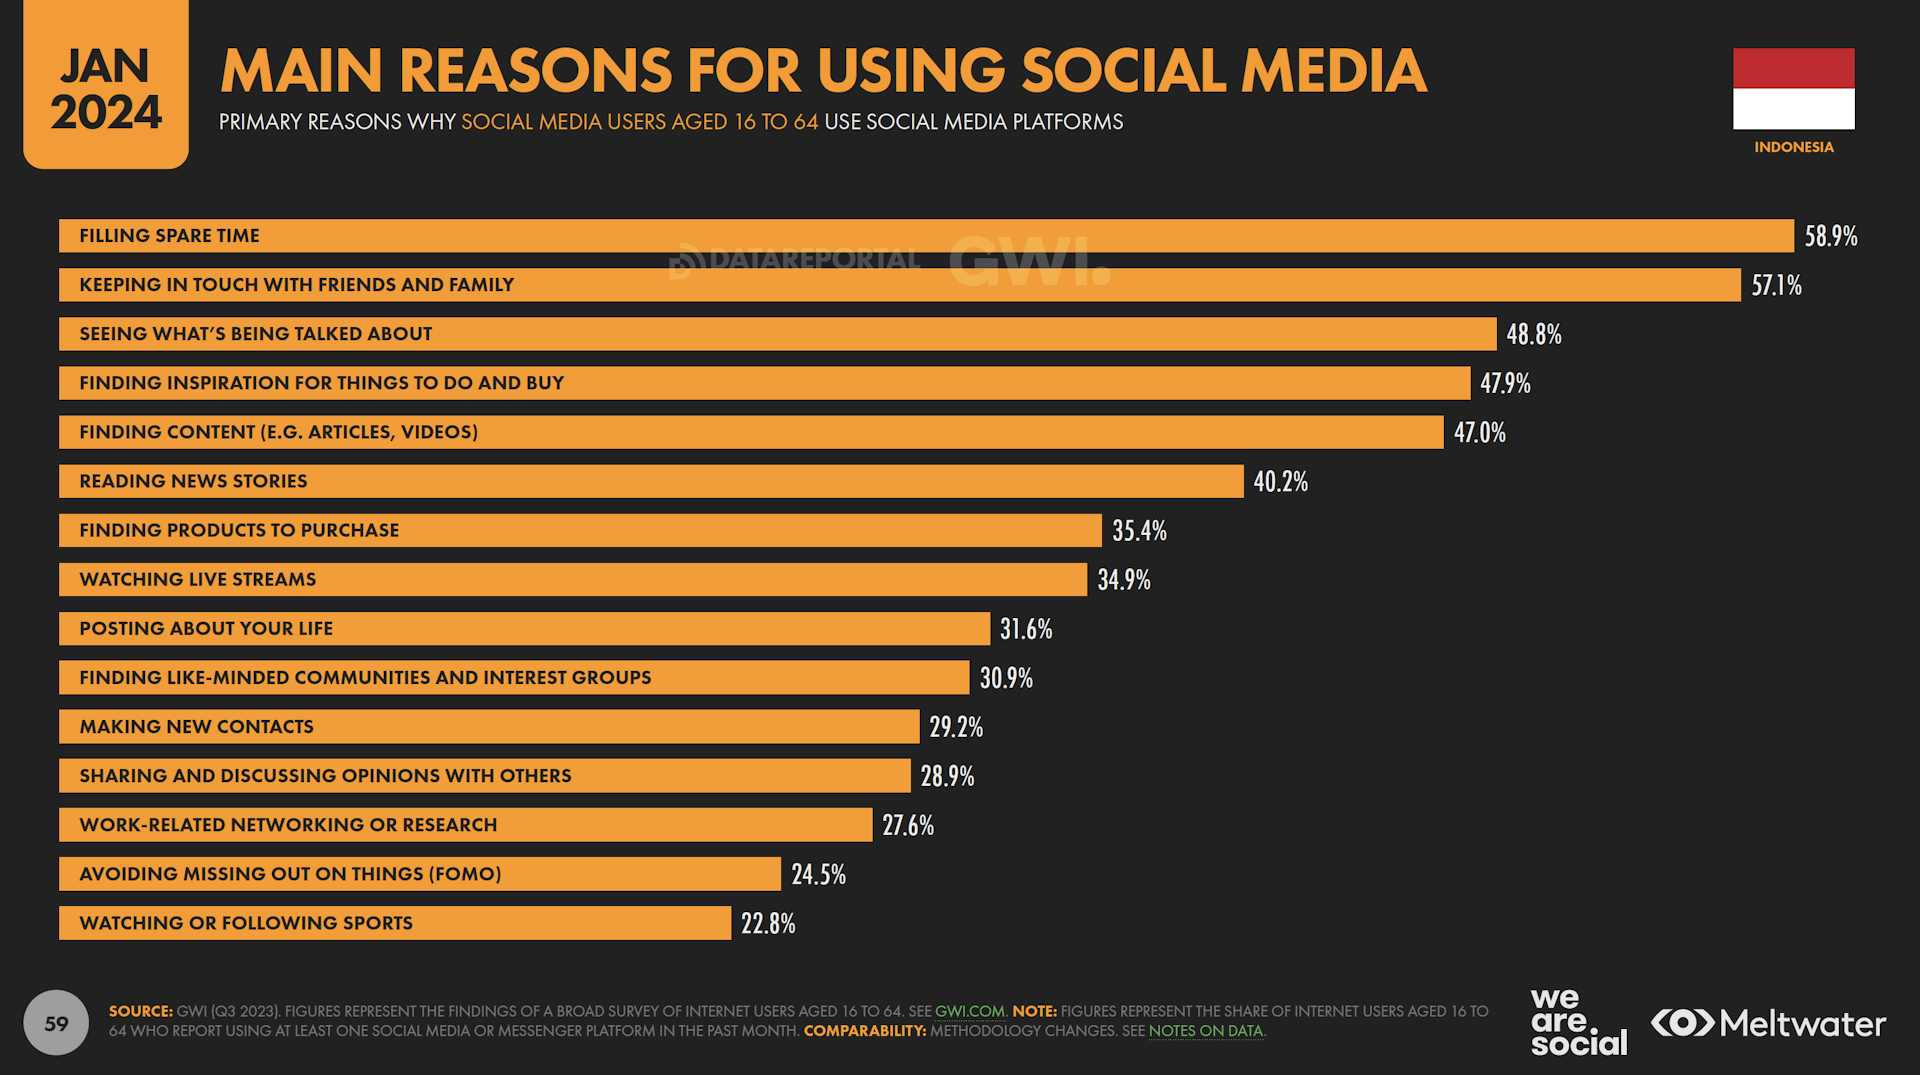 Main reasons for using social media based on Global Digital Report 2024 for Indonesia